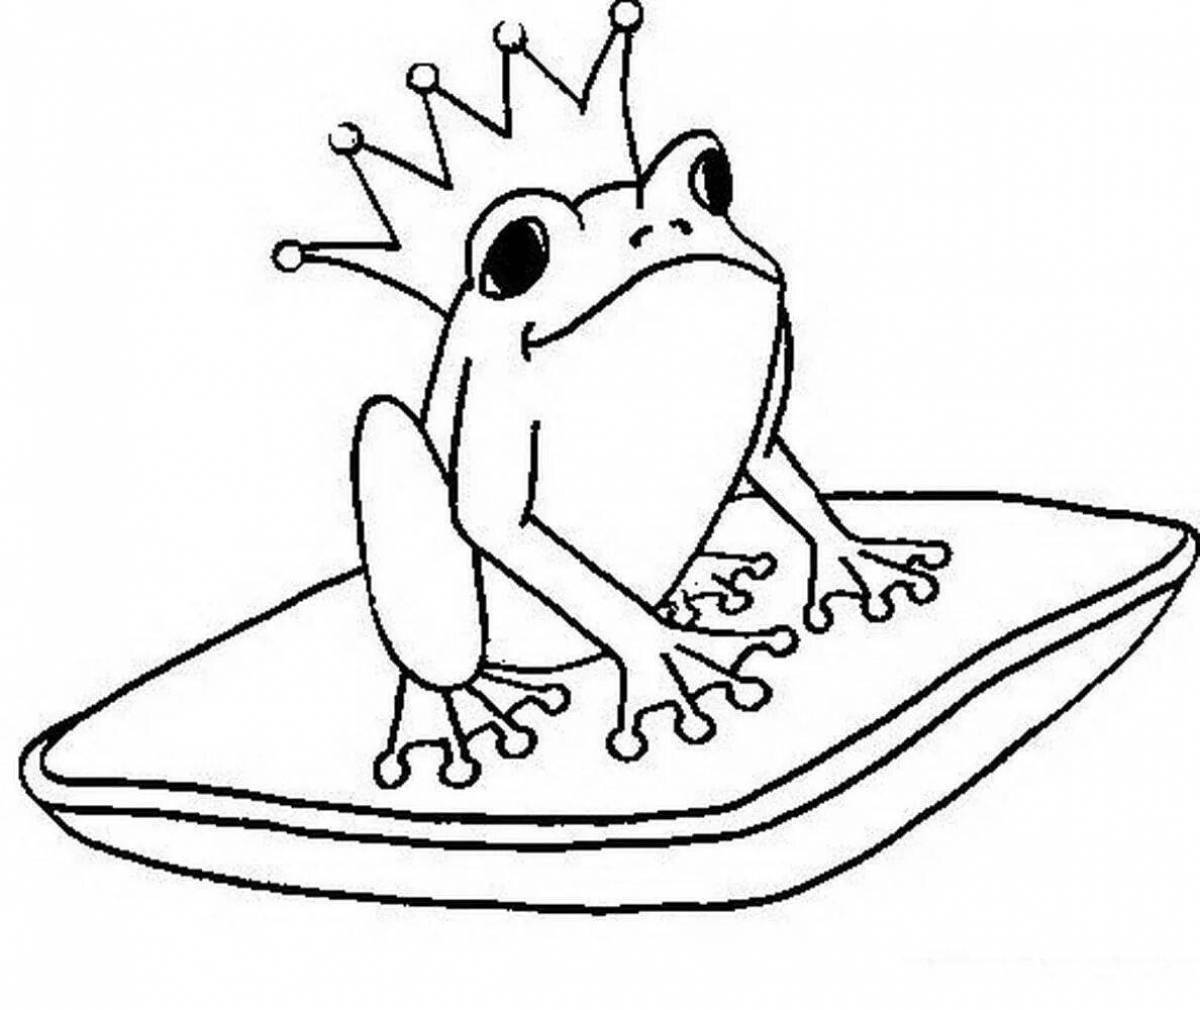 Cute frog princess coloring book for kids